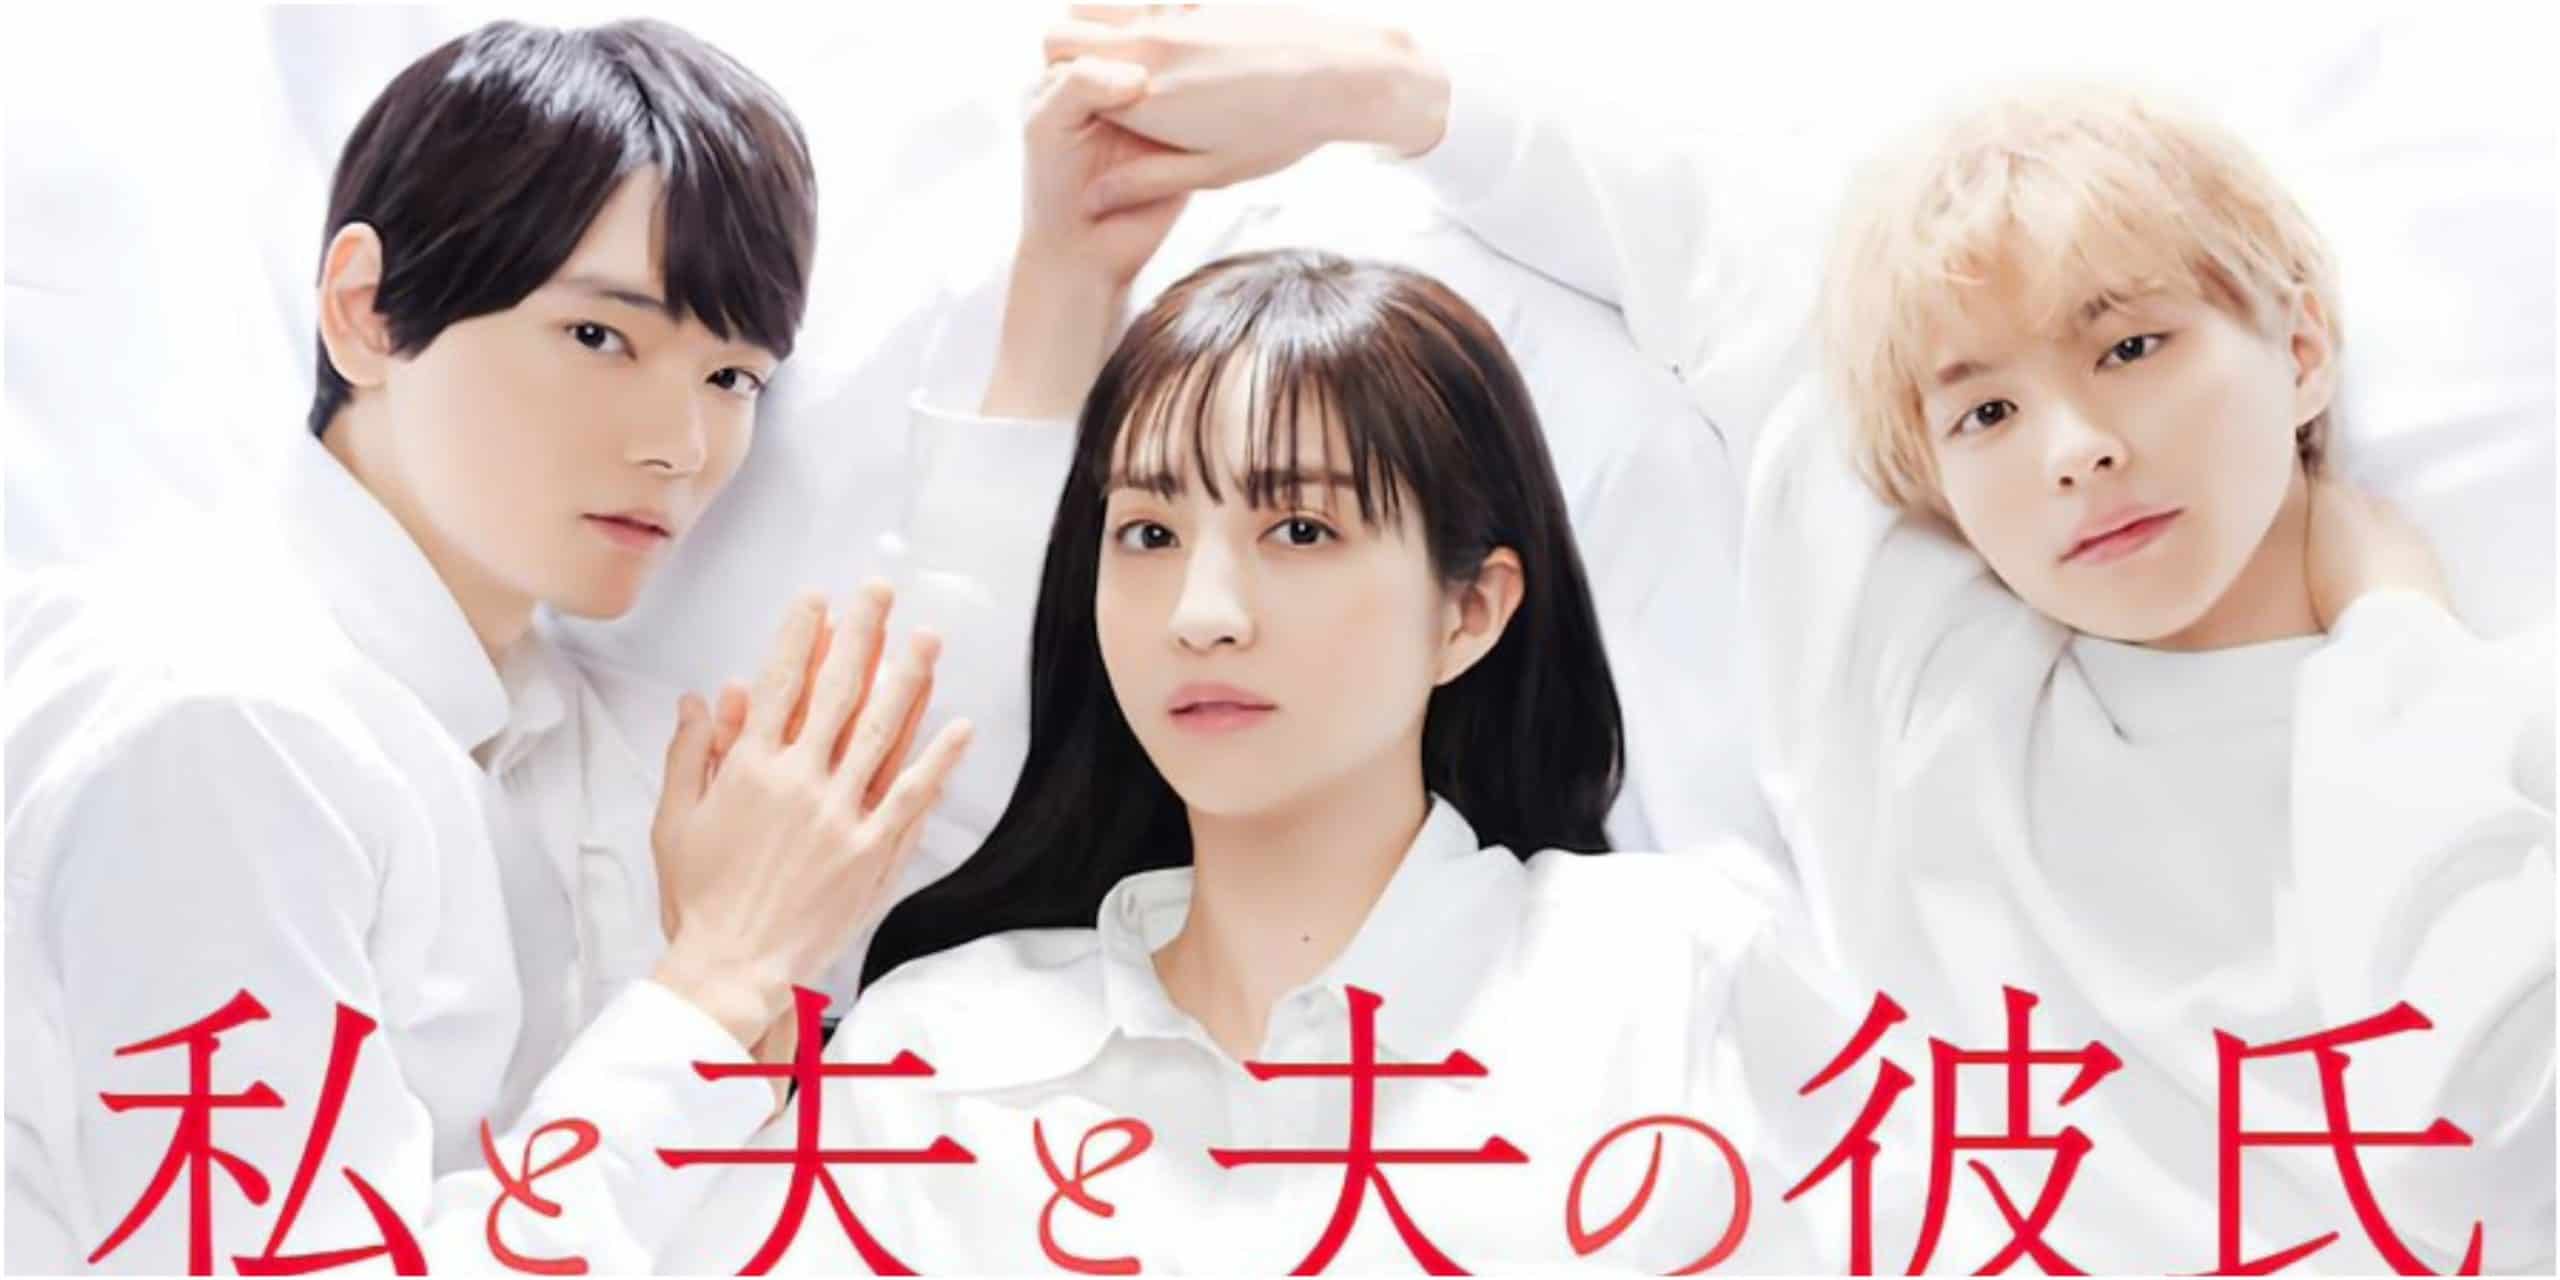 Watashi to Otto to Otto no Kareshi Japanese BL Drama Episode 6 Synopsis